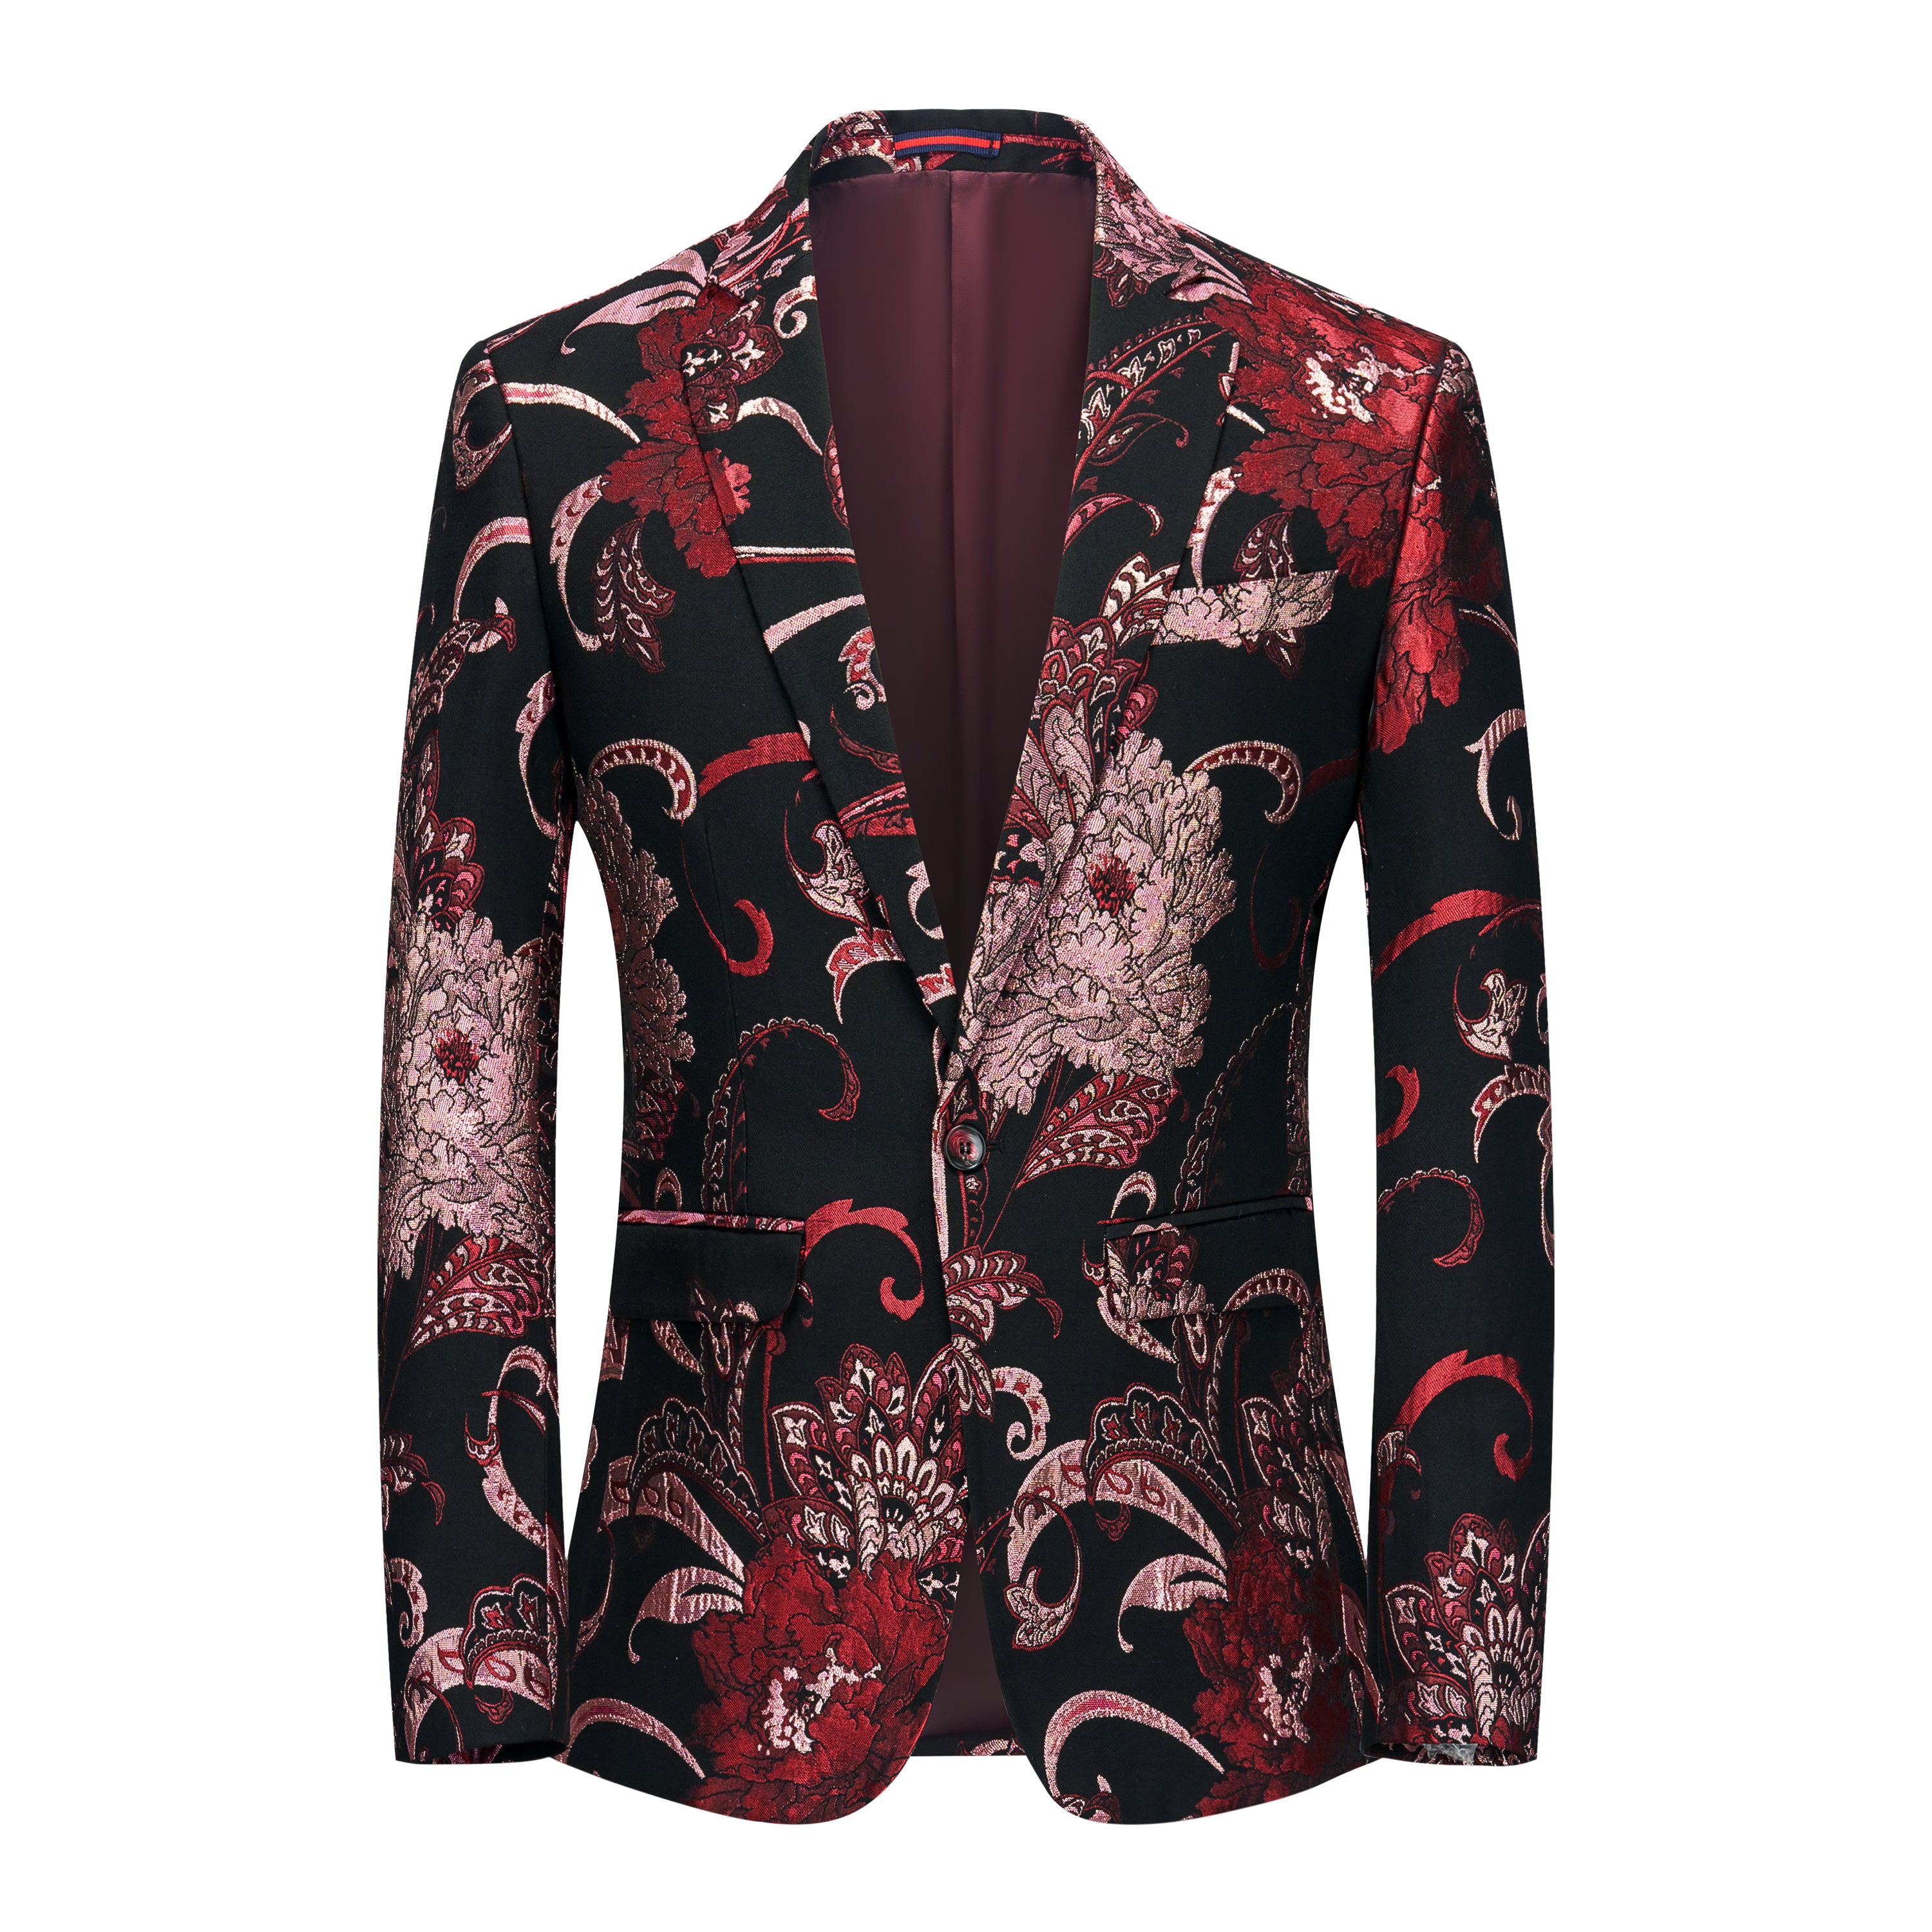 Men's Blazer Casual One Button Suit Jacket Leisure Floral Printed Sport Coat